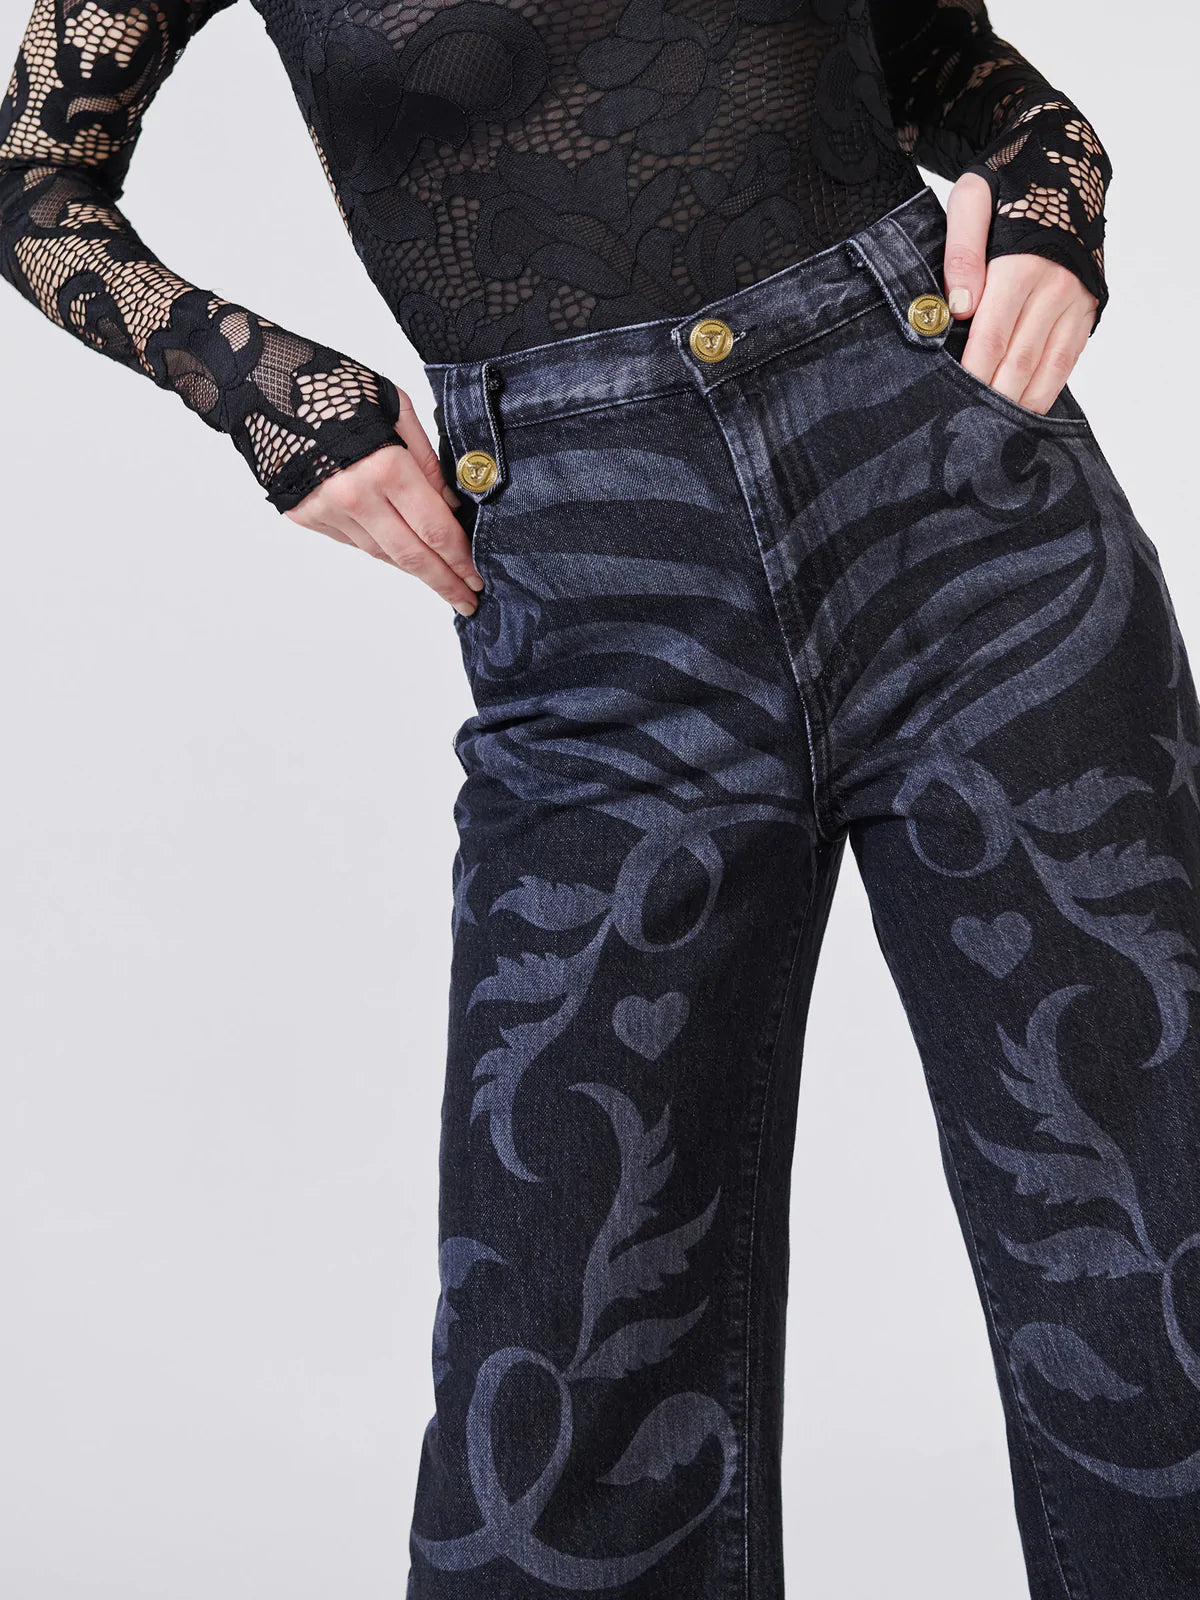 Belle Starr Laser Print Wide Jeans - LIMITED EDITION